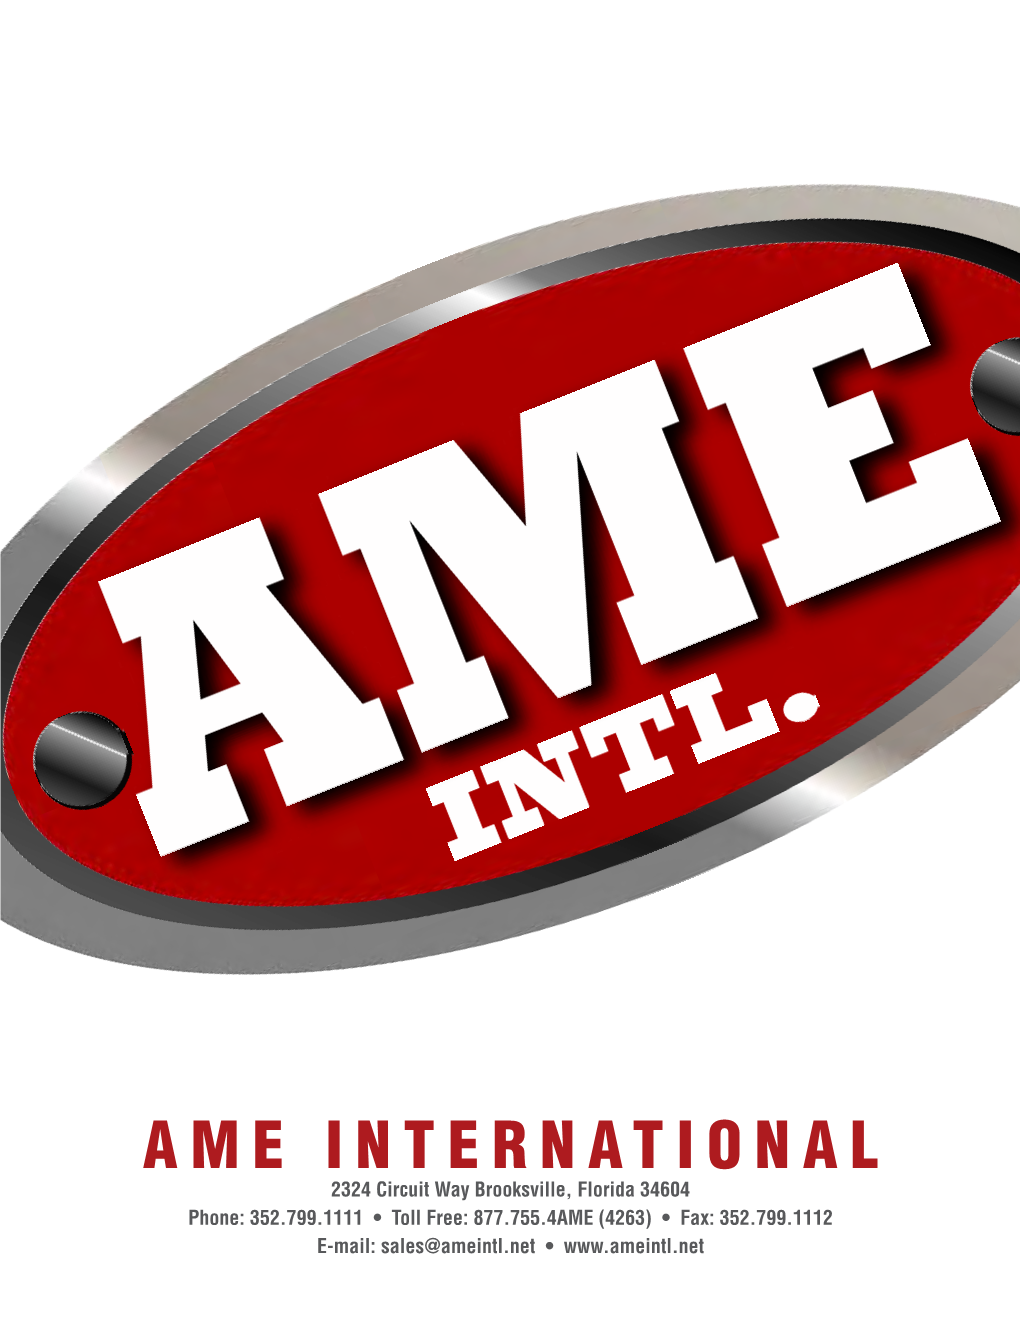 Ame International